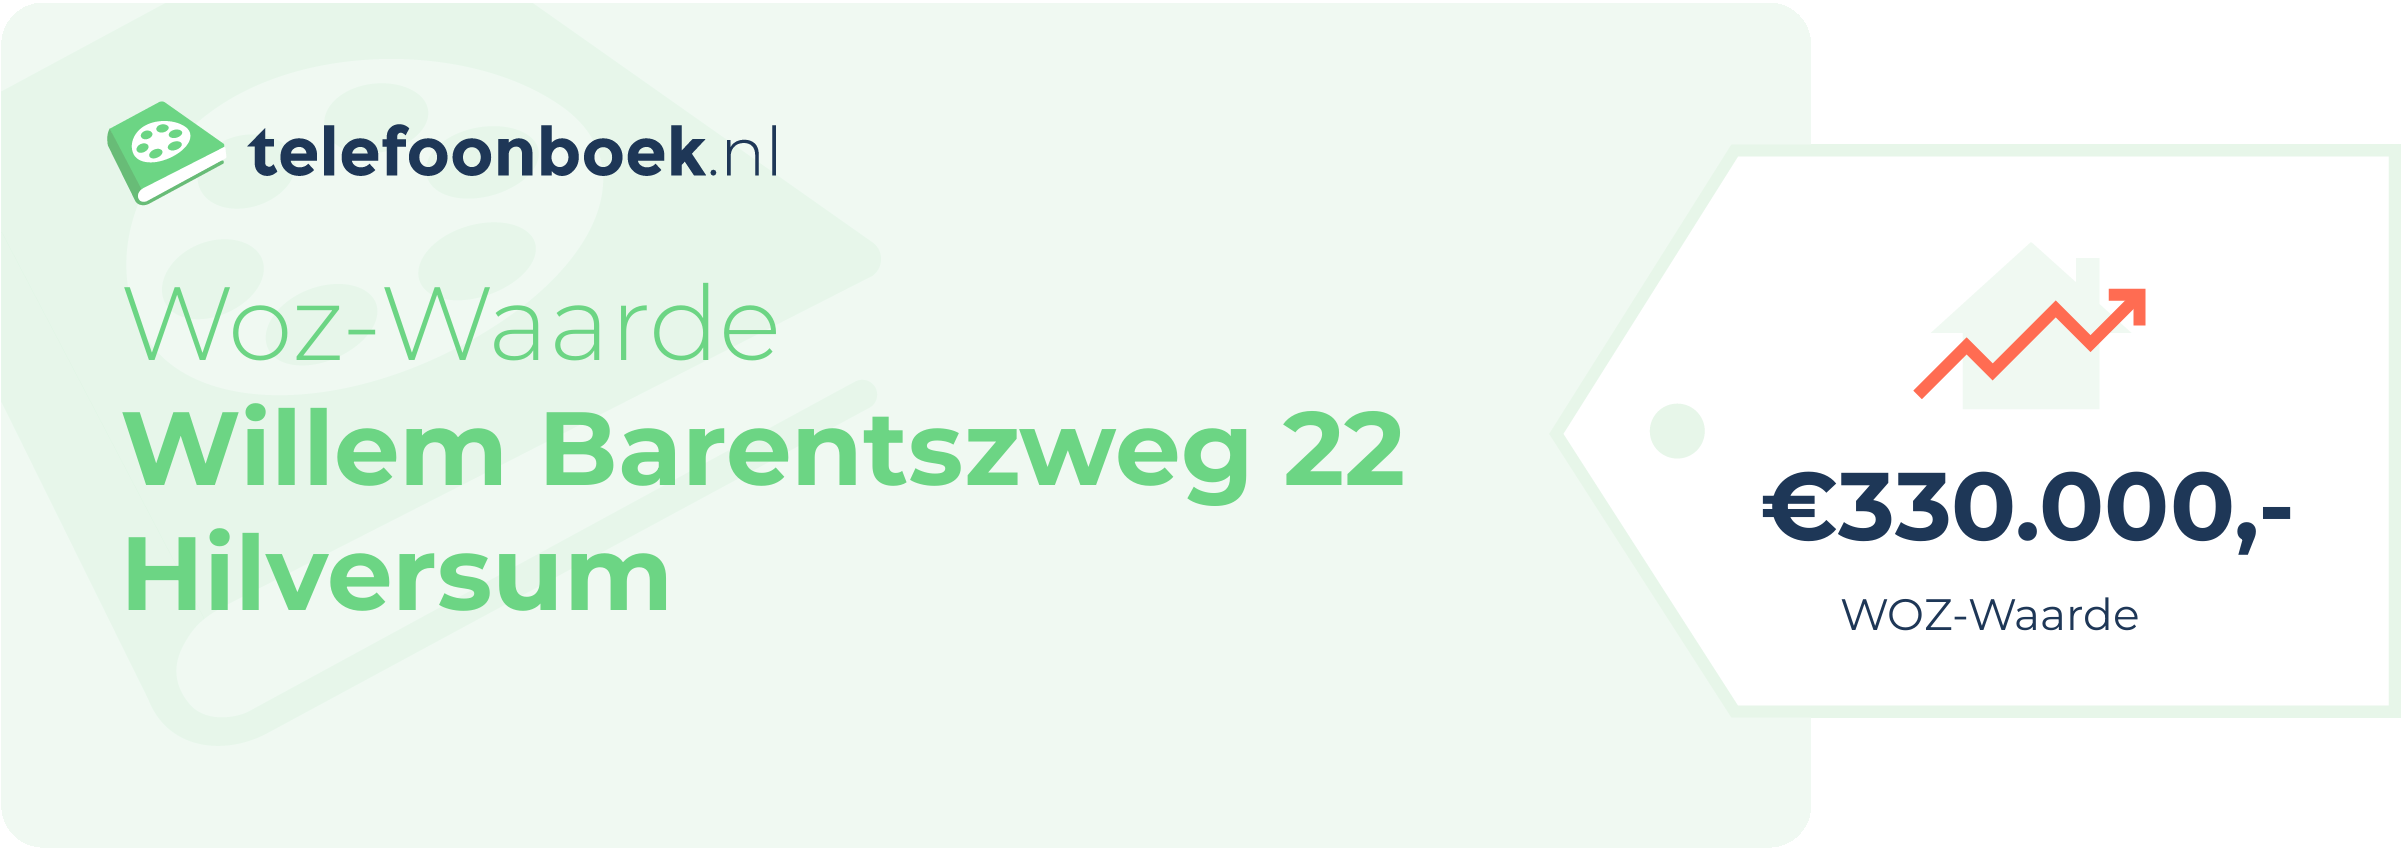 WOZ-waarde Willem Barentszweg 22 Hilversum